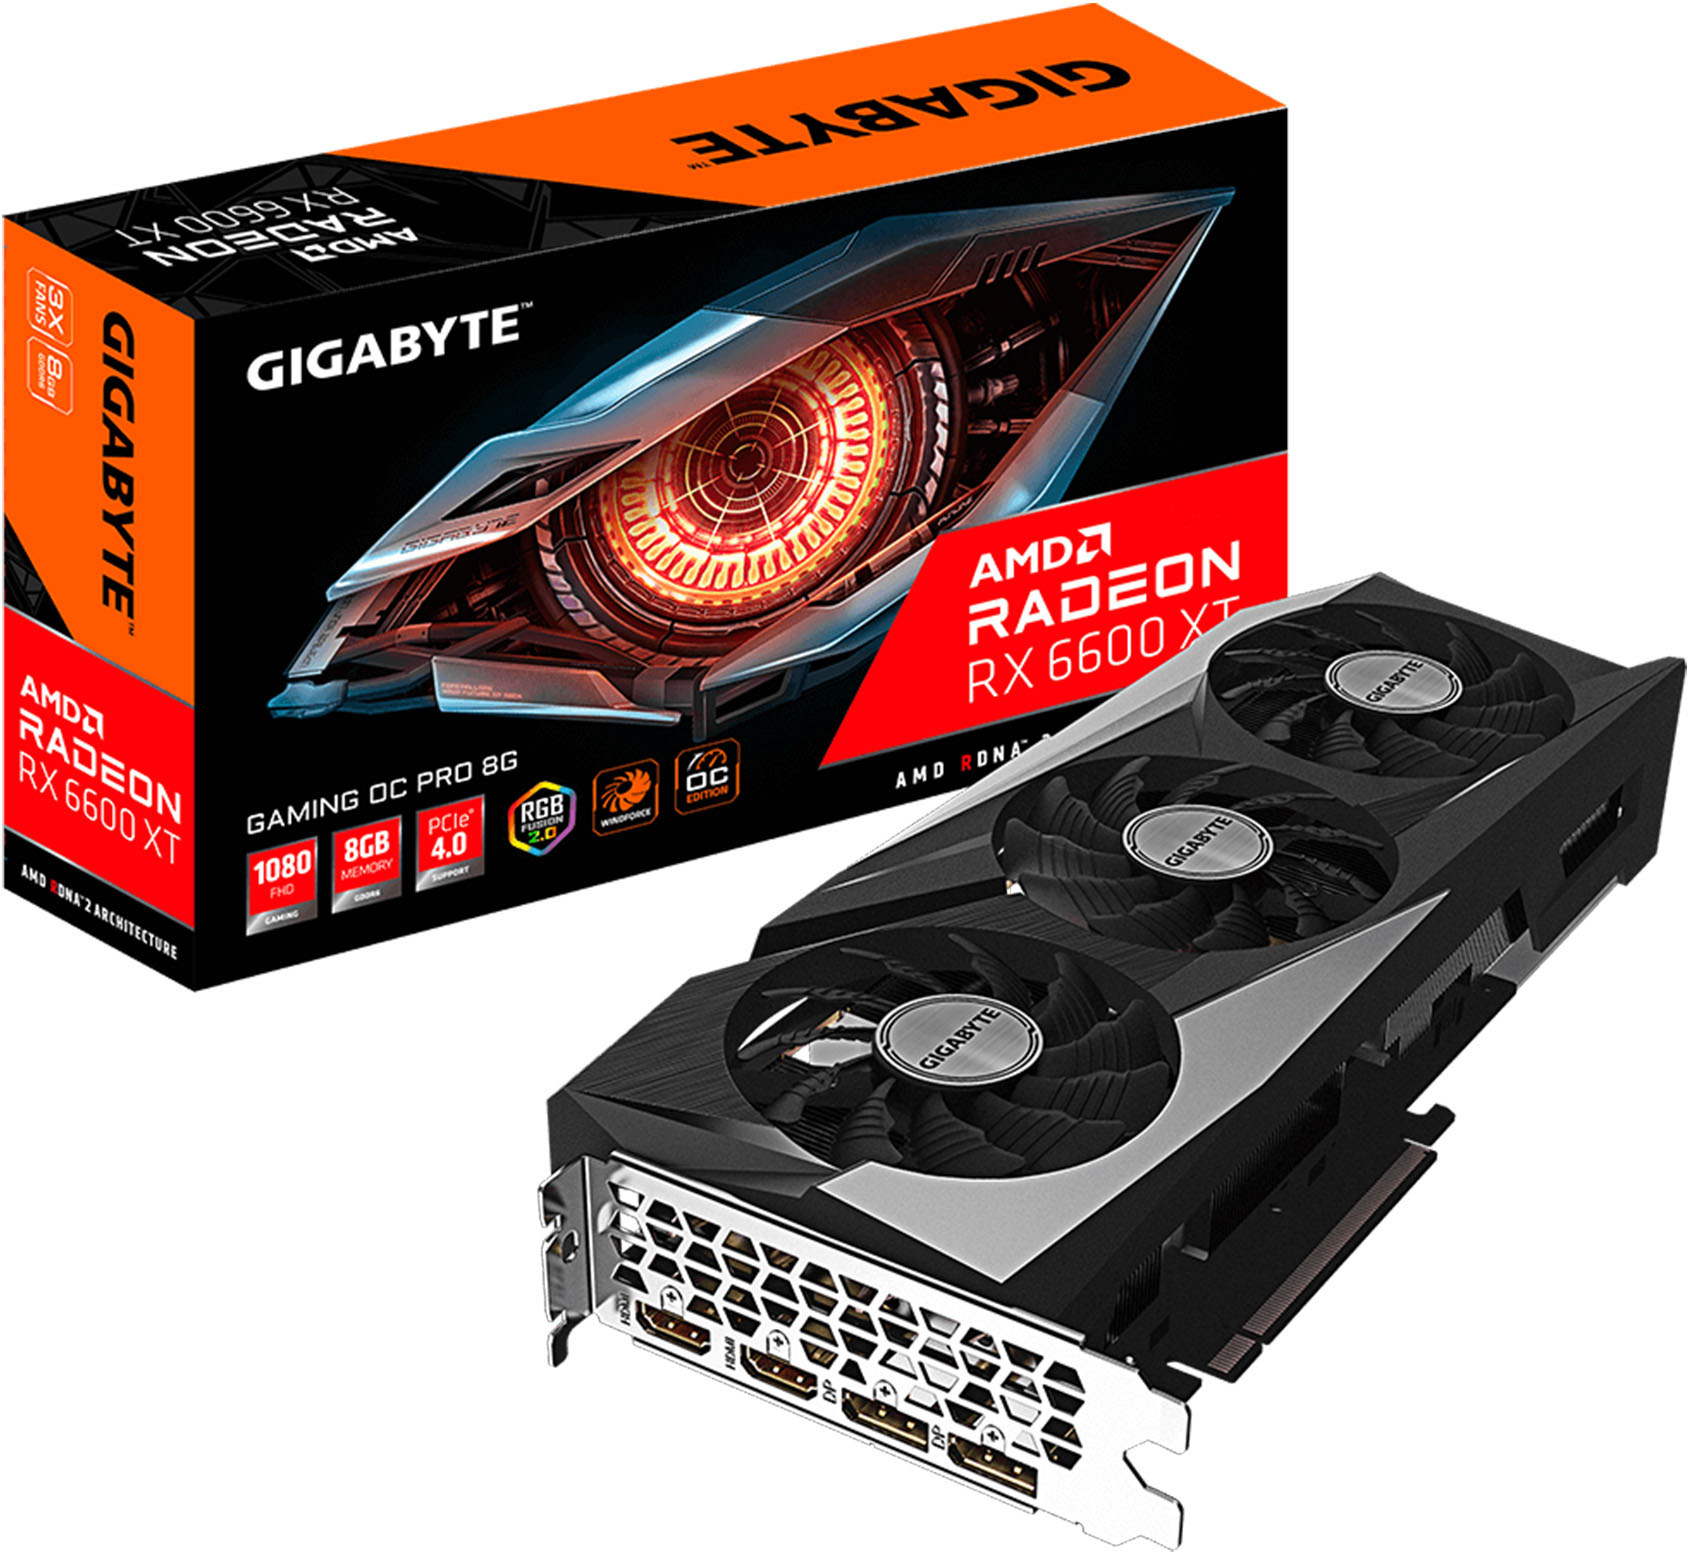 Best Buy: GIGABYTE AMD Radeon RX 6600 XT GAMING OC PRO 8GB GDDR6